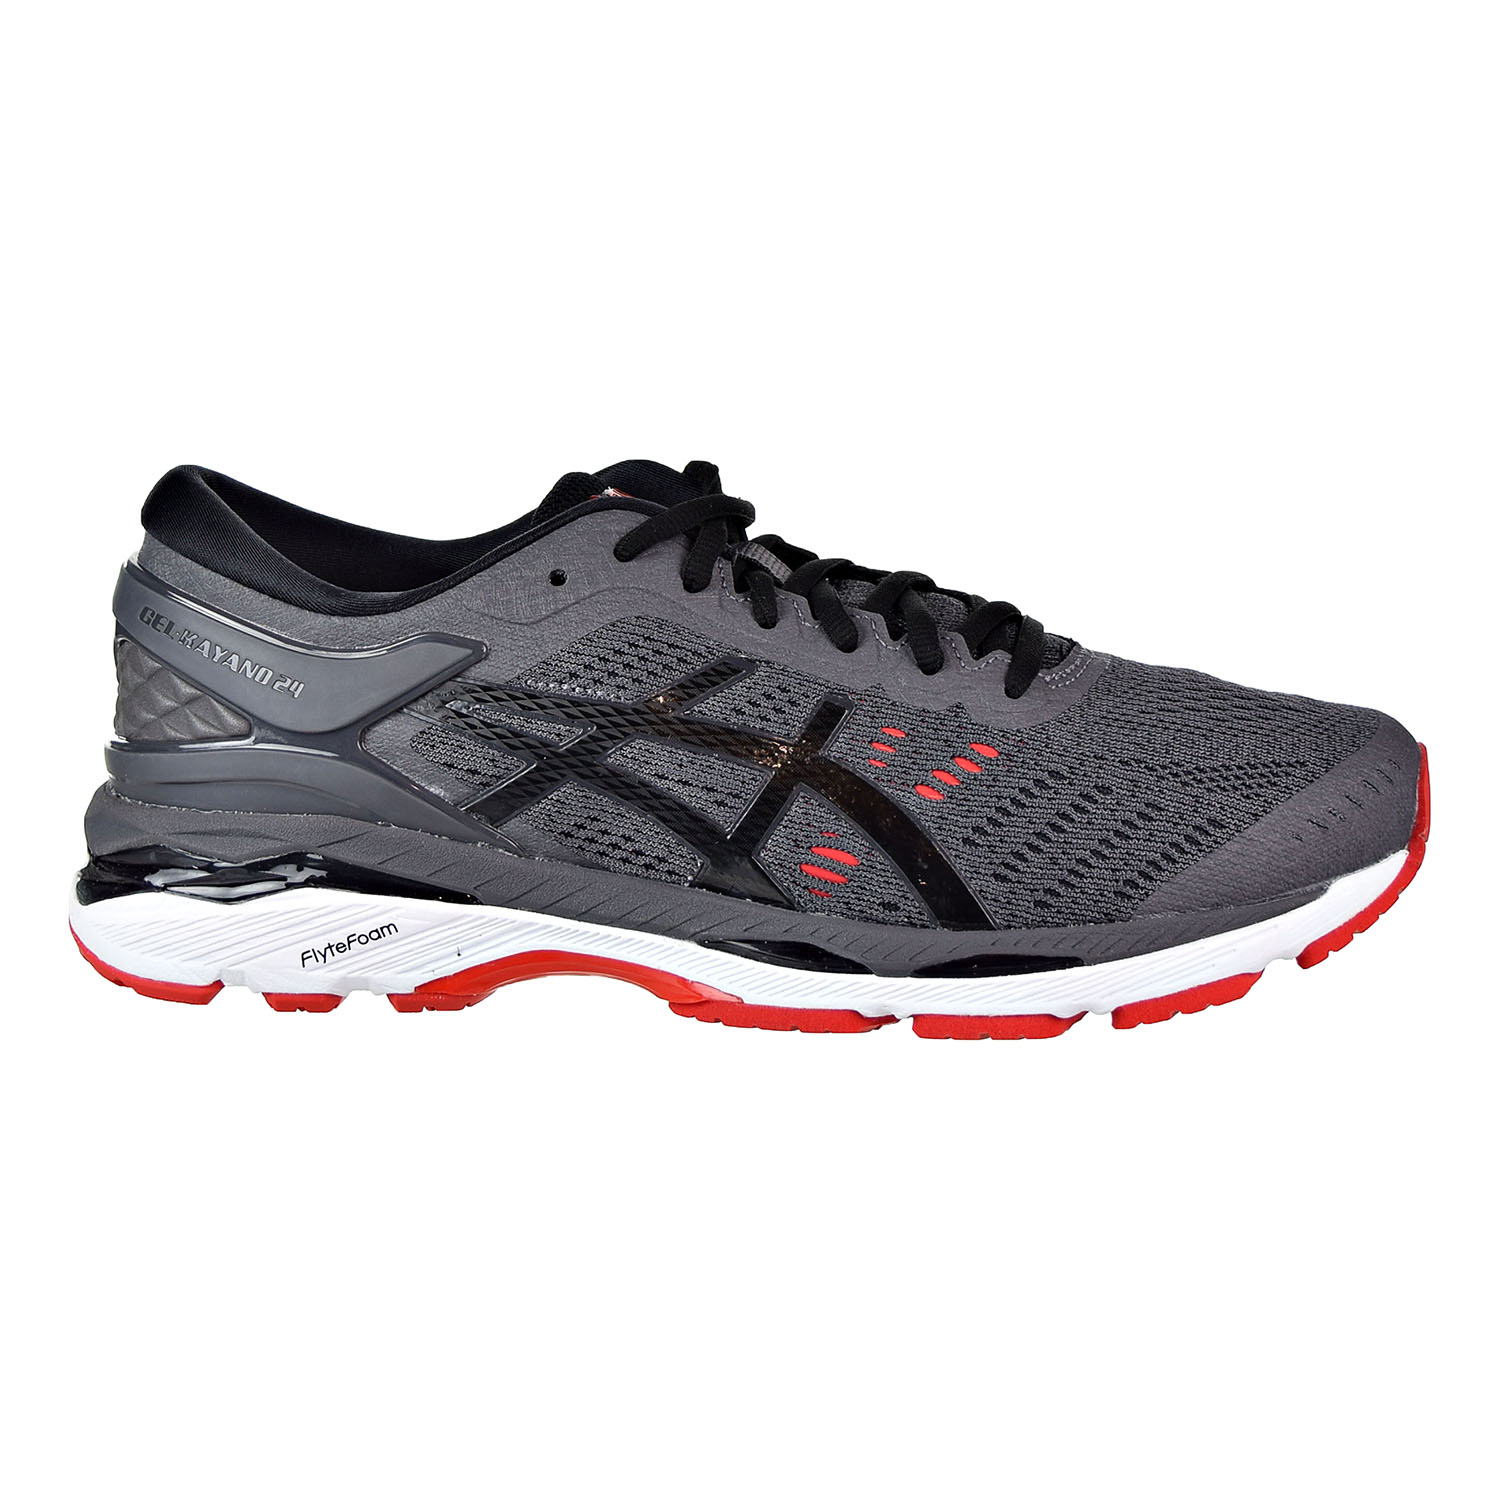 Estricto científico apretado ASICS Asics Gel Kayano 24 Men's Running Shoes Dark Grey/Black/Fiery Red  t749n-9590 (7.5 D(M) US)